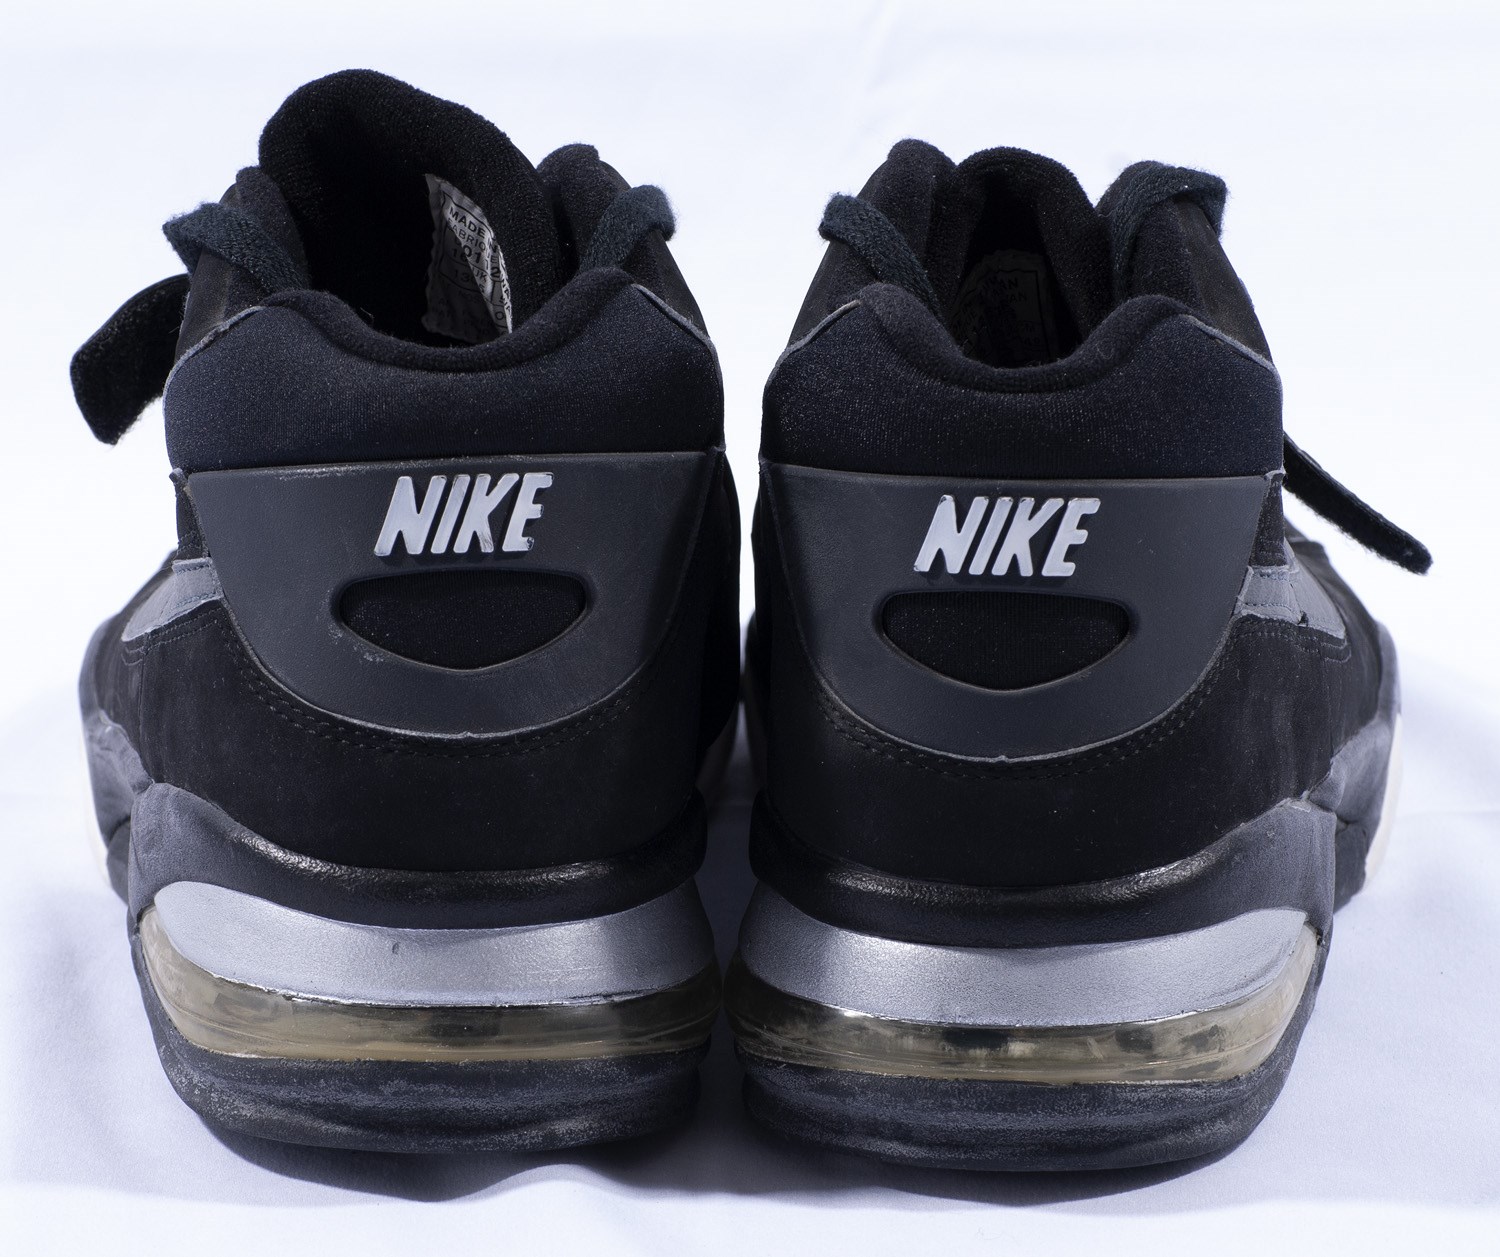 nike charles barkley shoes 1992